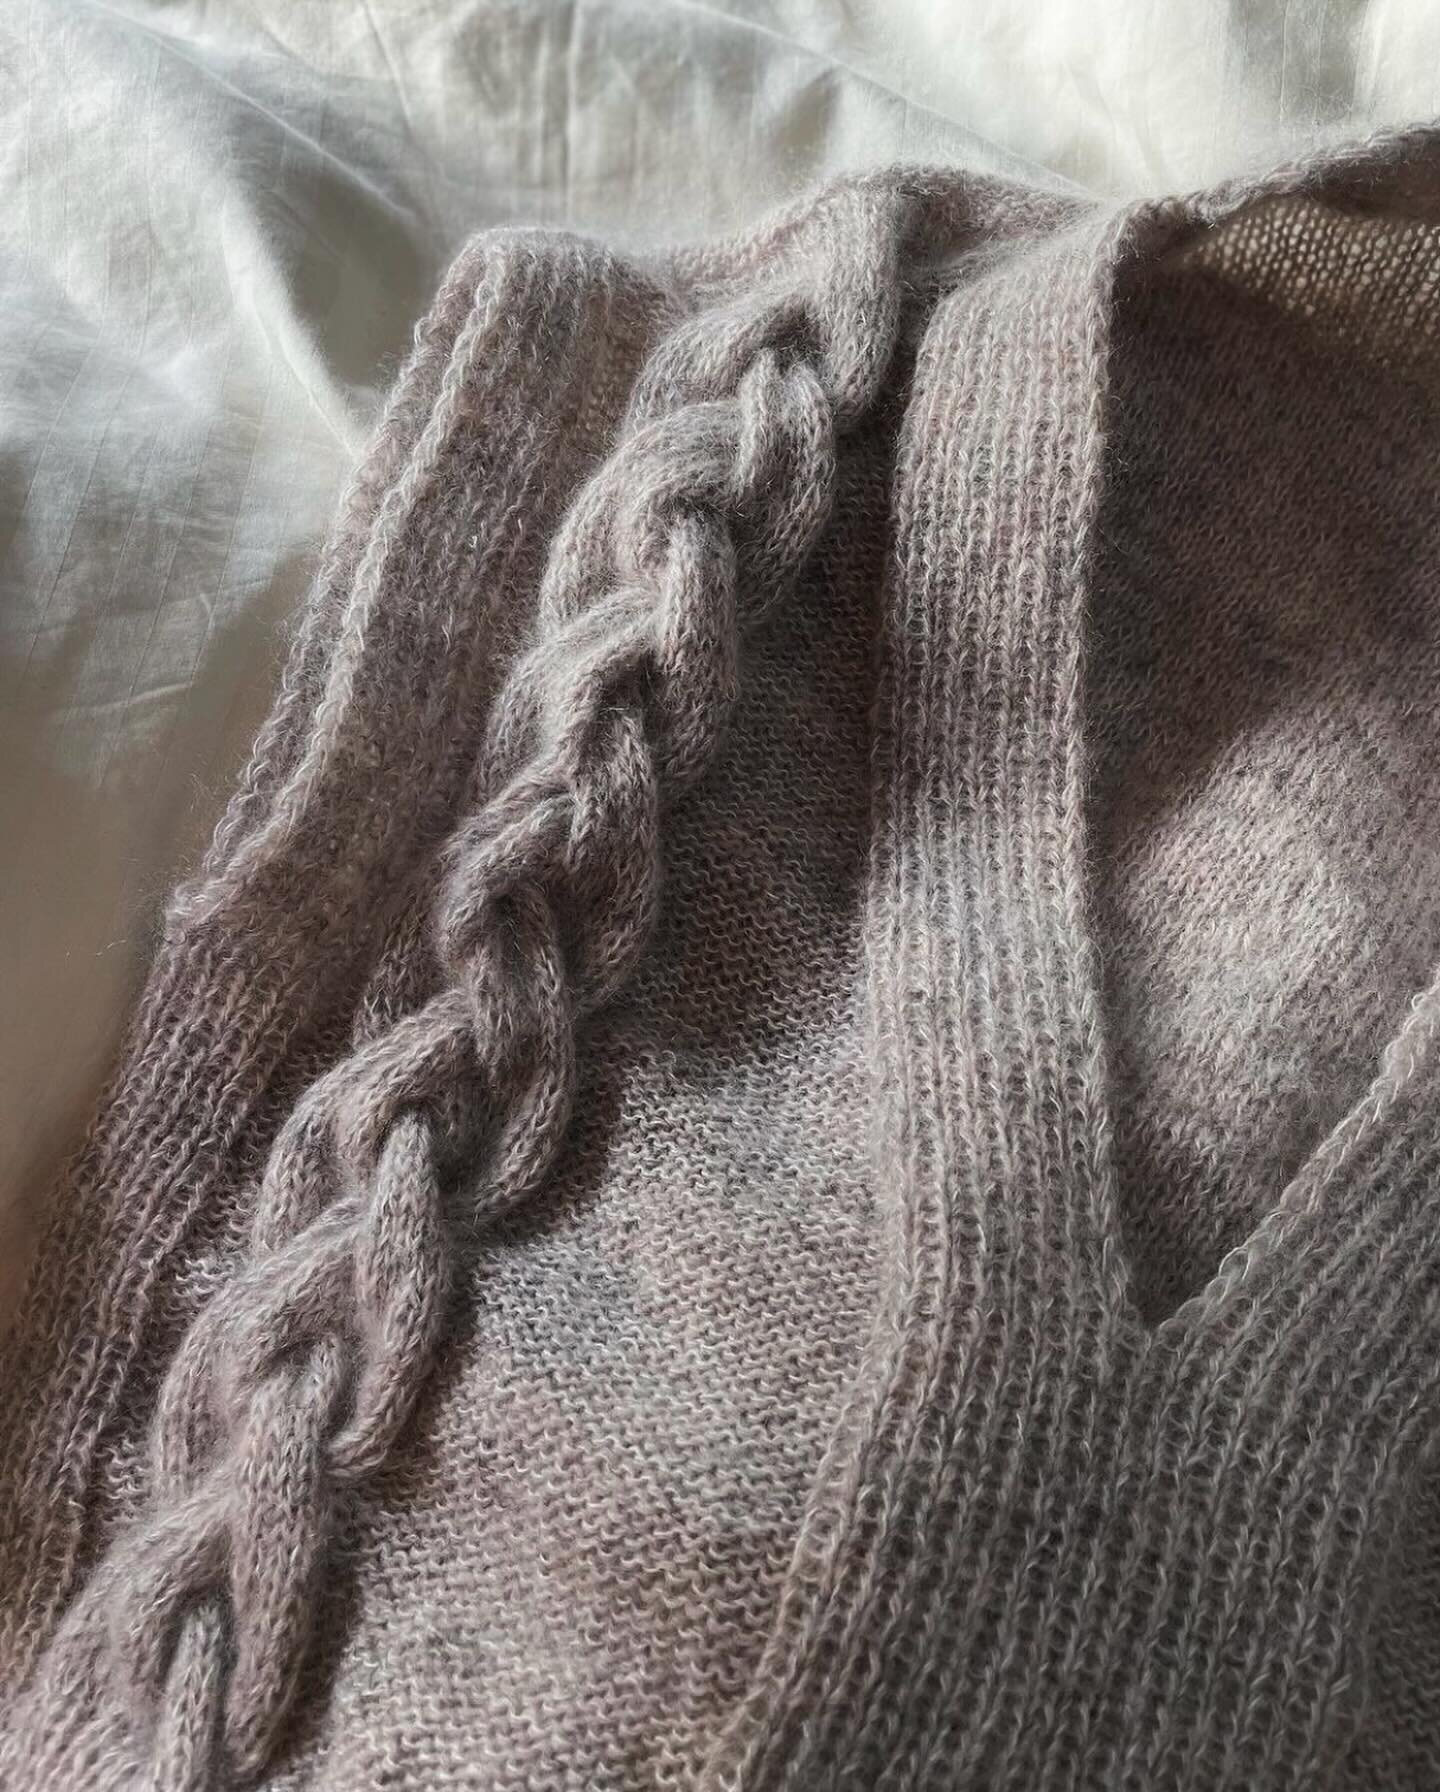 Nogle af test strikkerne er ved at v&aelig;re i m&aring;l med Umi Slipover. Her er det @strikkemarly &lsquo;s fine lyse version 🤎

&bull;
&bull;
&bull;

#ukiyoknit #umislipover #isageryarn #strik #strikkeopskrift #knit #knitting  #knittersofinstagra